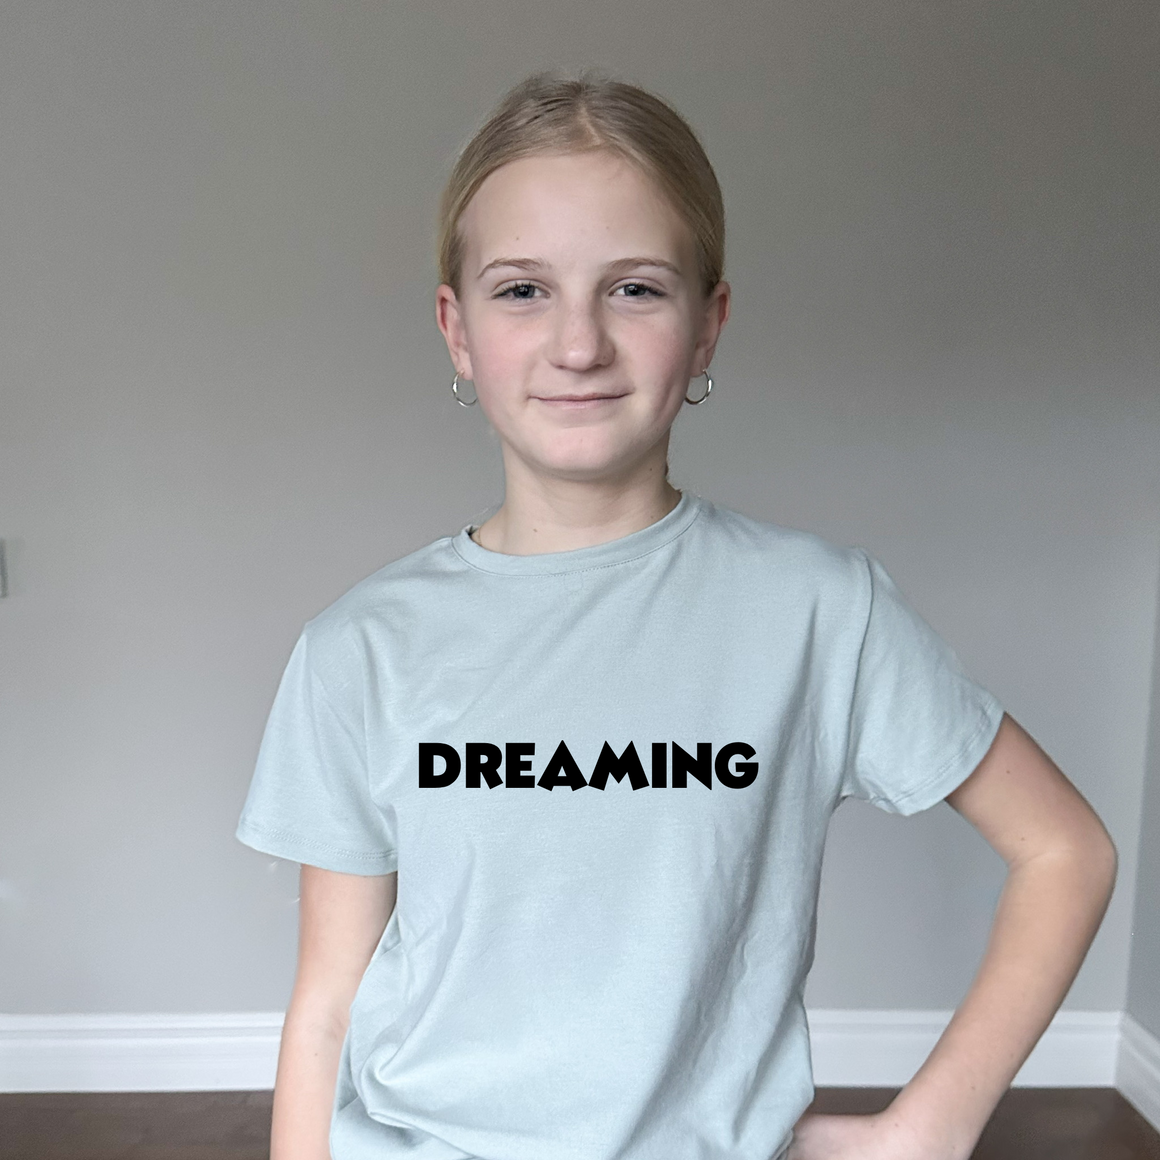 Dreaming Tee Shirt Youth - Posh & Cozy